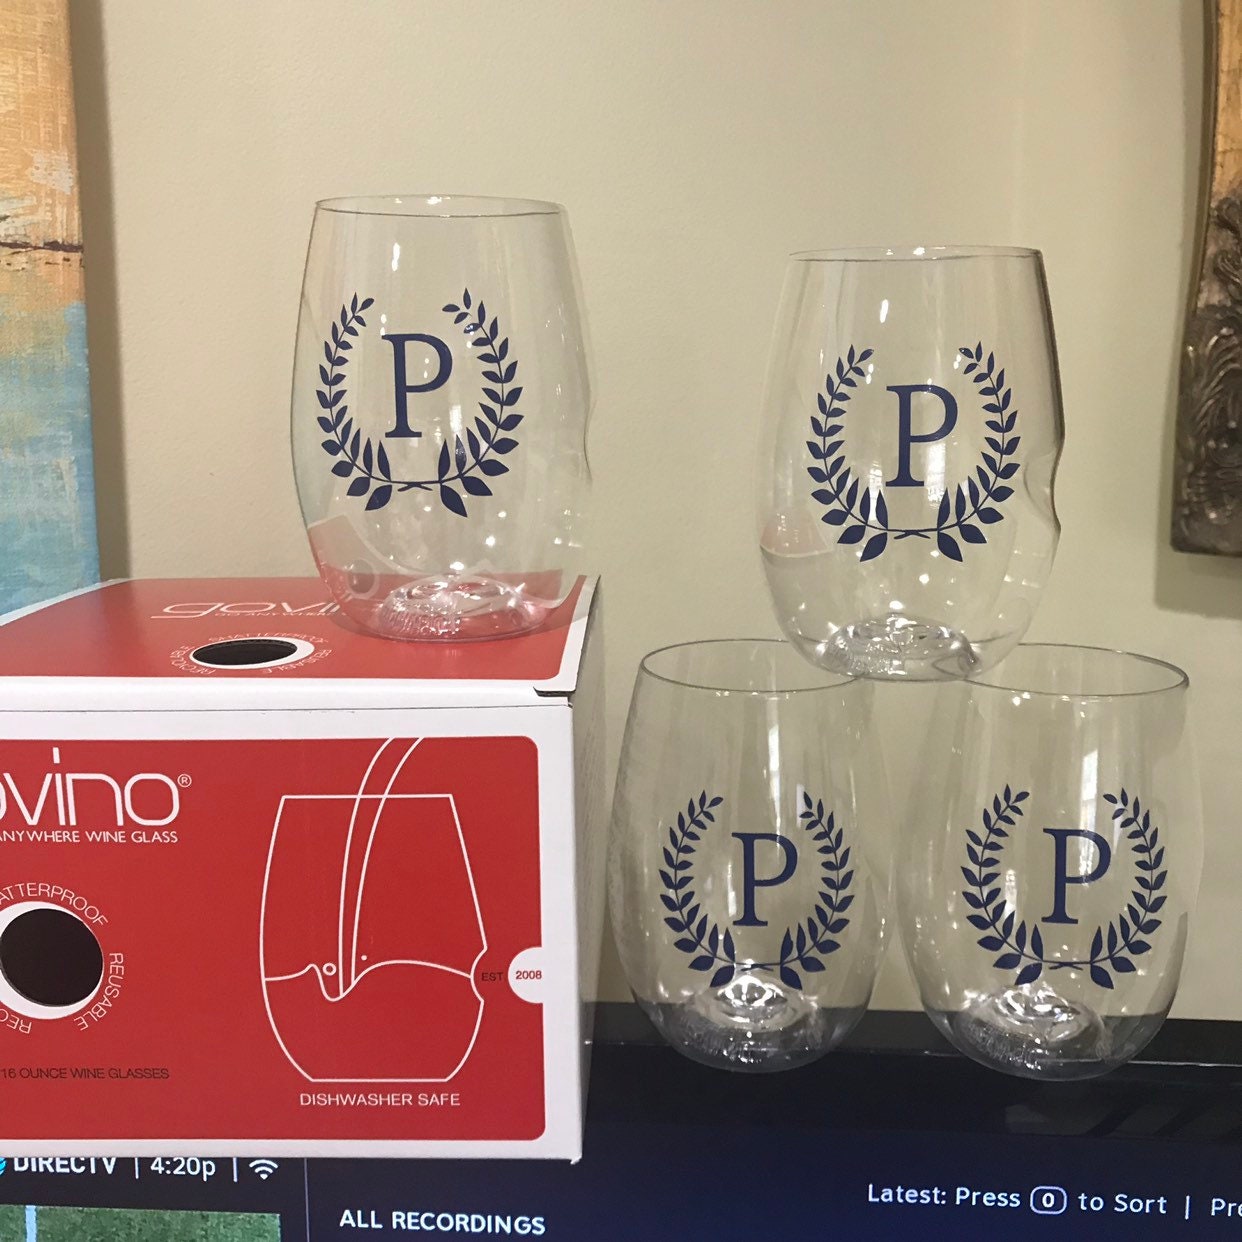 Shatterproof Tritan Stemmed Wine Glasses, Acrylic Glasses Tritan Drinkware,  Unbreakable Colored | 6 …See more Shatterproof Tritan Stemmed Wine